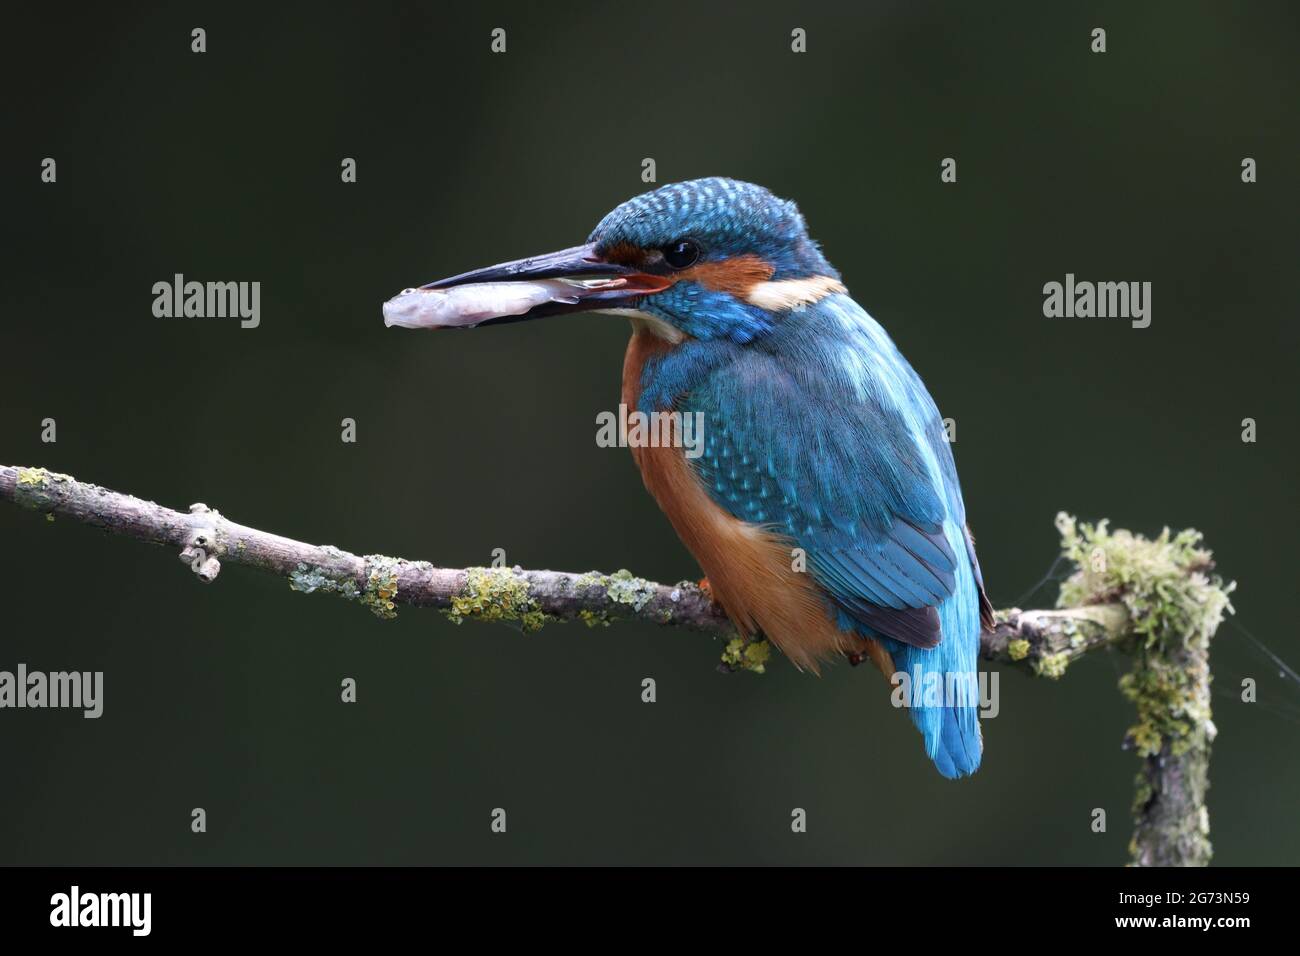 Kingfisher Photography at Shropshire Bird Nascondi Foto Stock